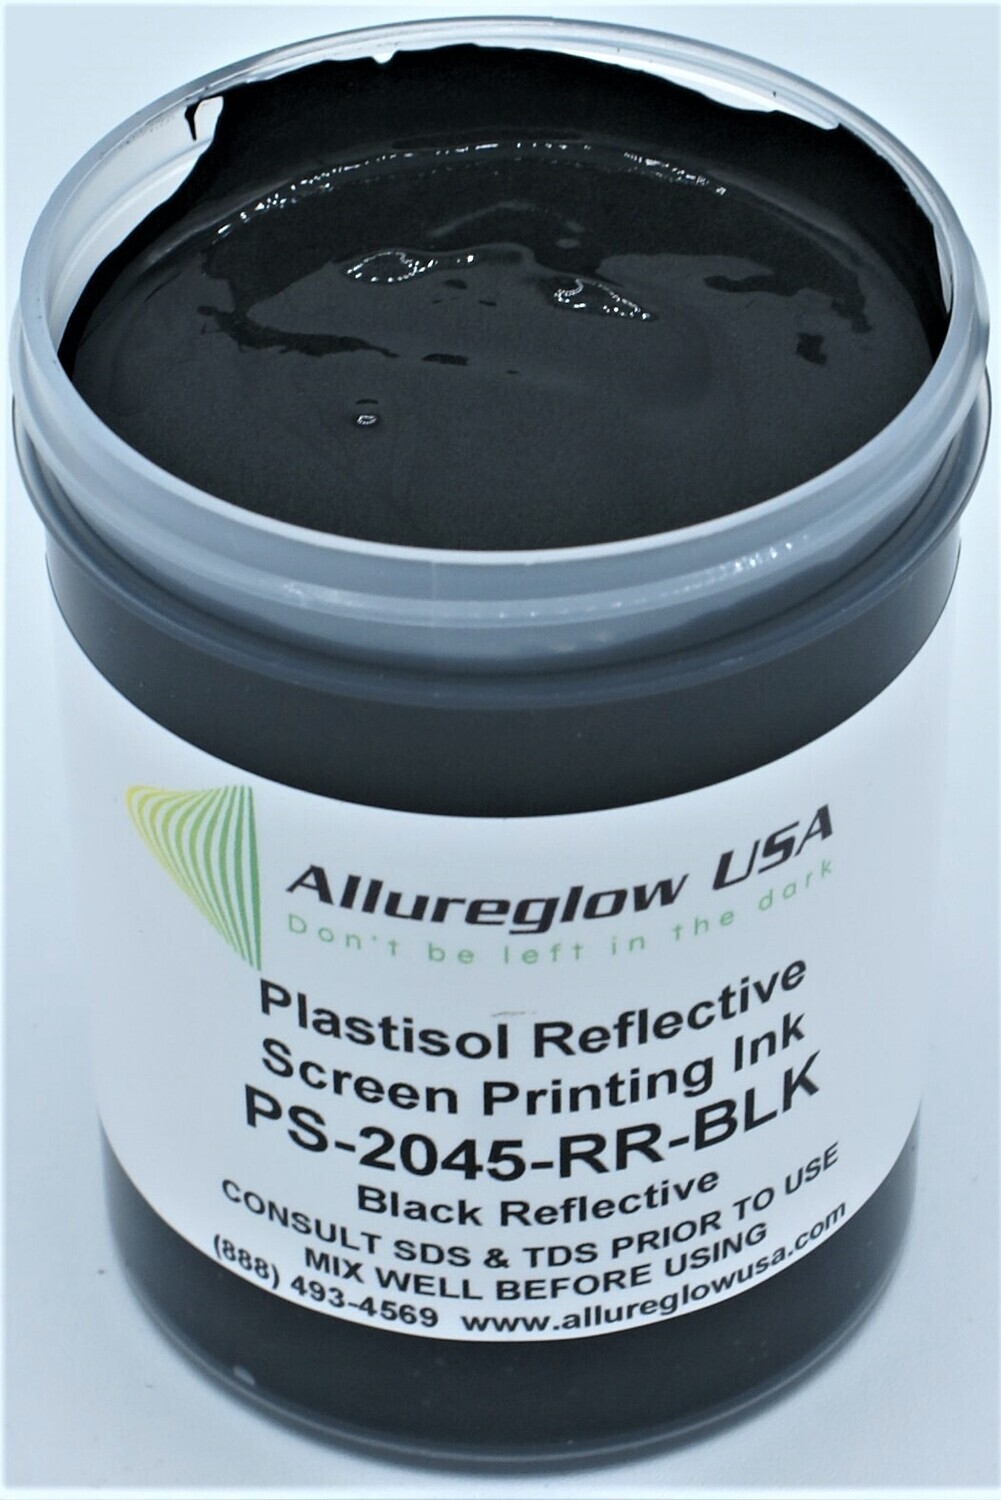 PS-2045-RR-BLK-GL   PLASTISOL BLACK REFLECTIVE INK  - GALLON